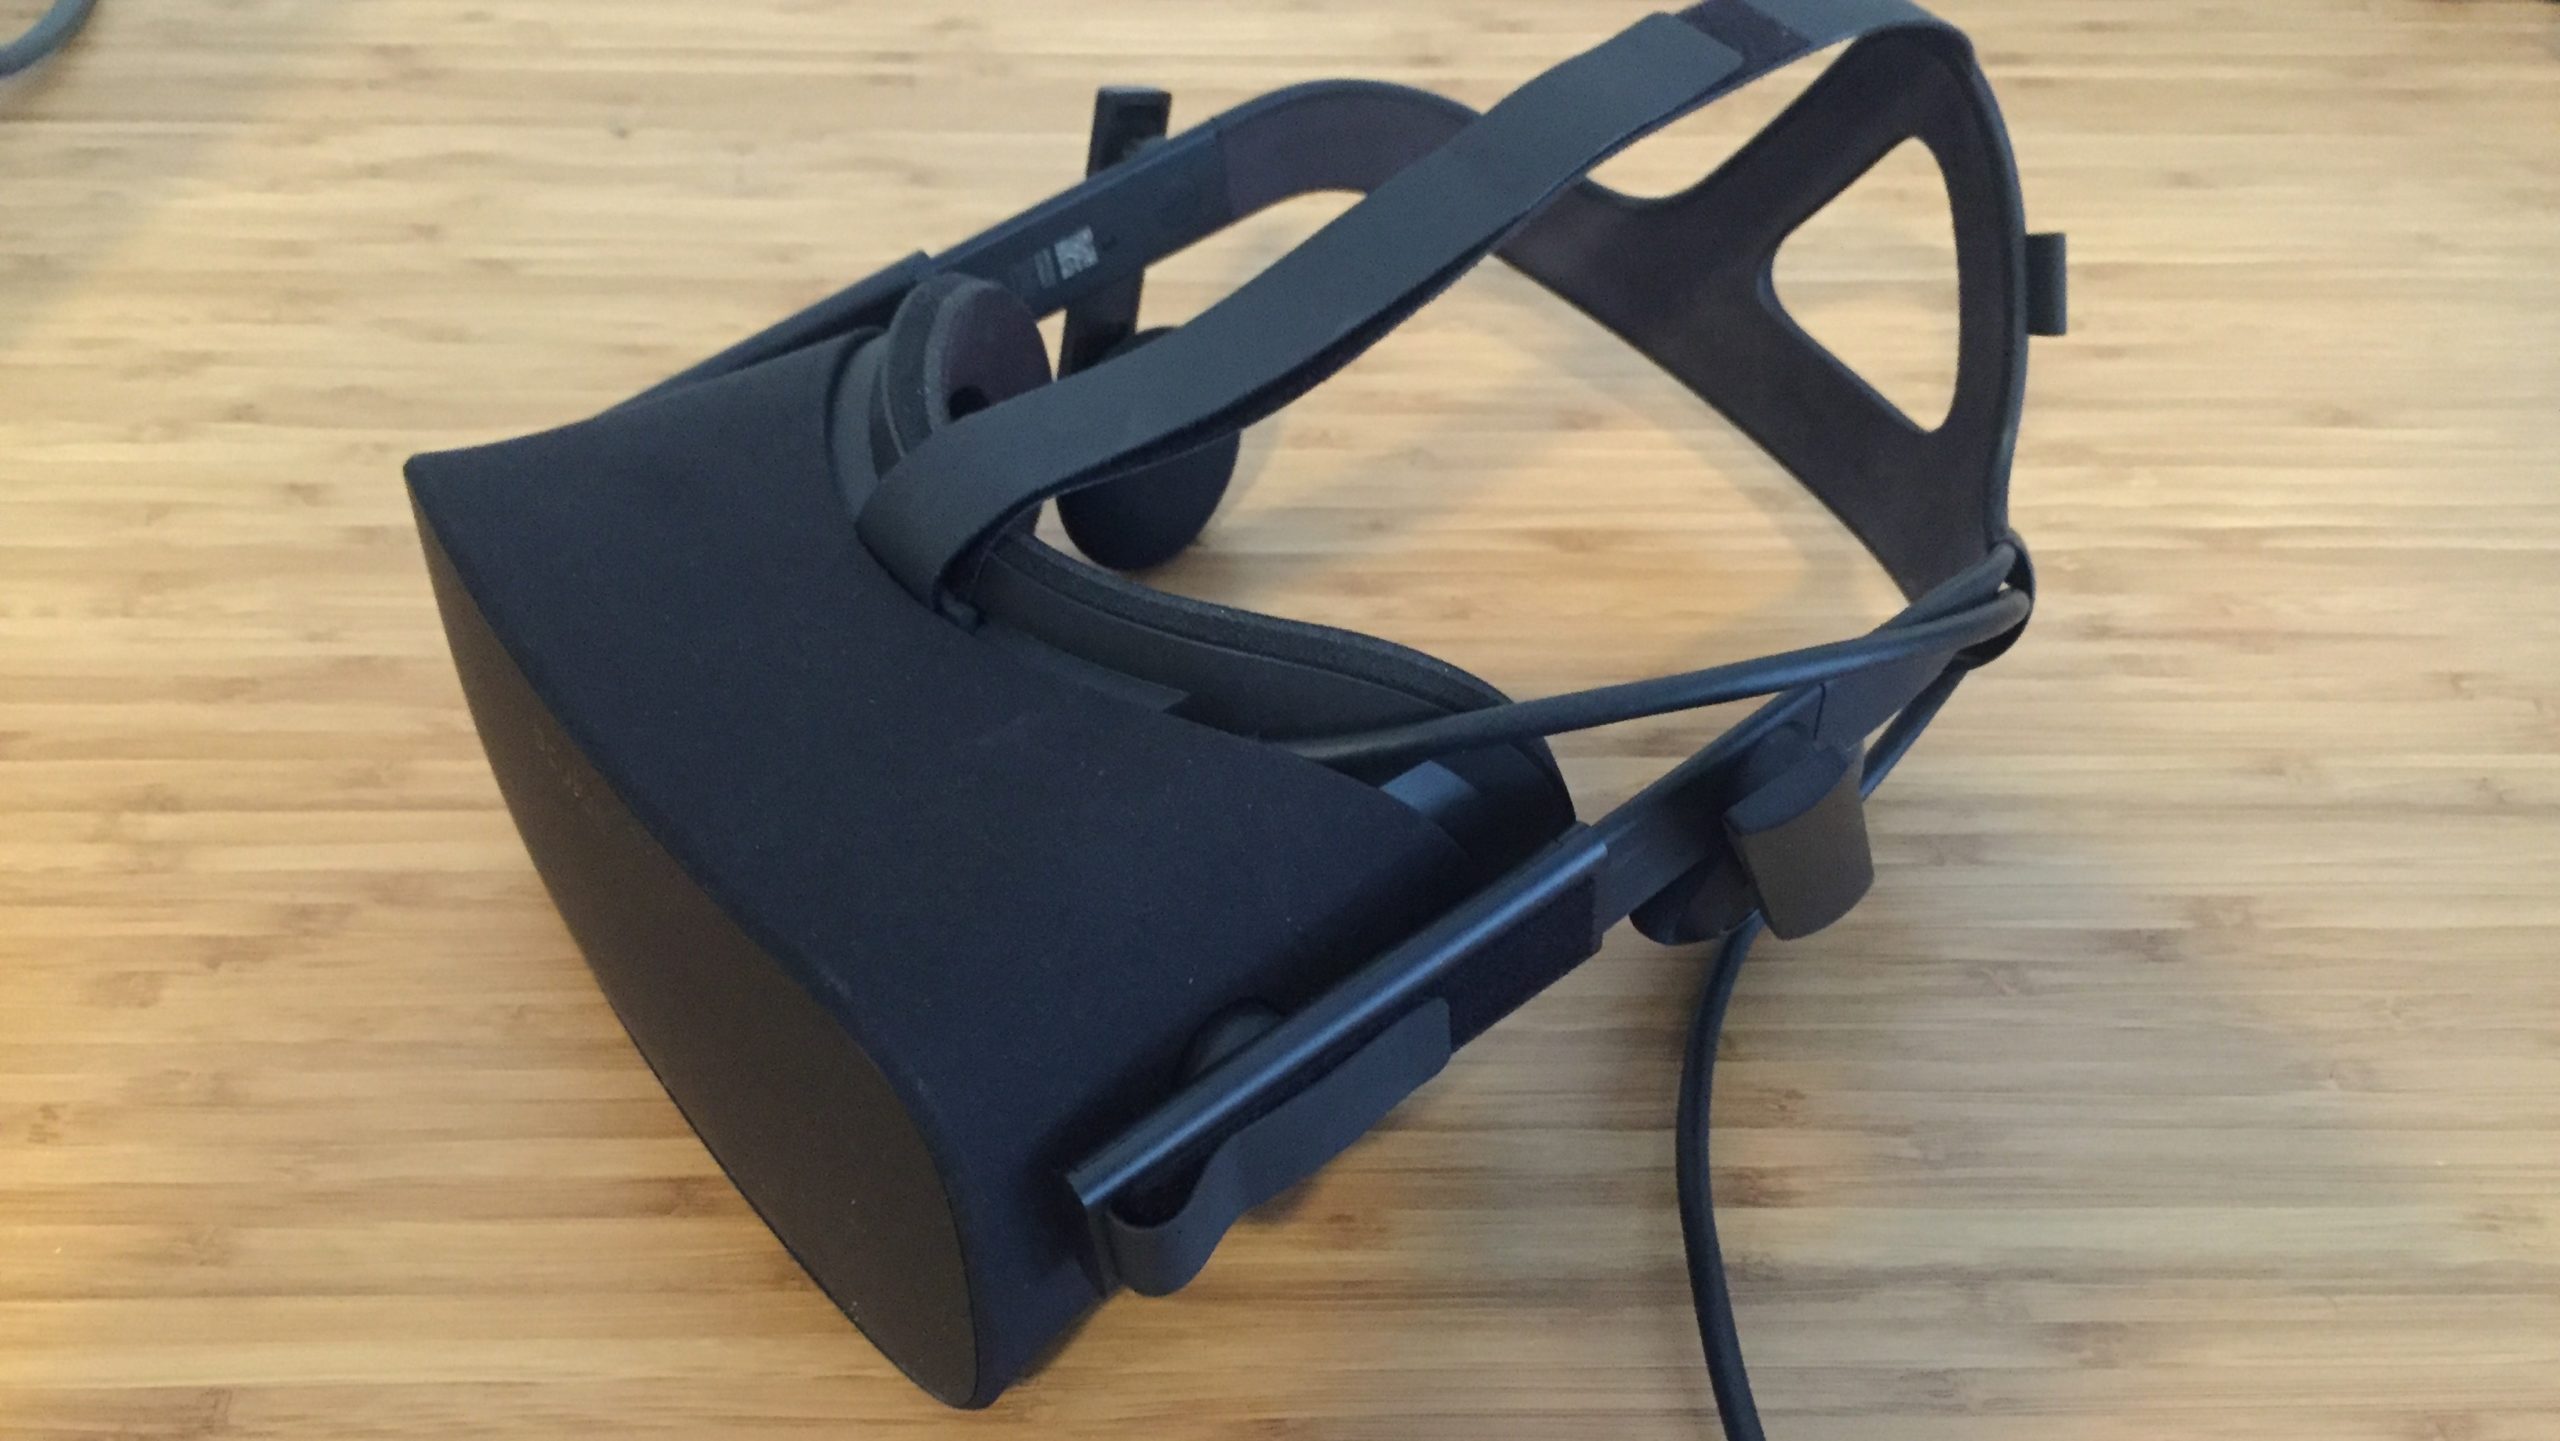 HTC Vive Vs. Oculus Rift: The Comparison We Had To Make